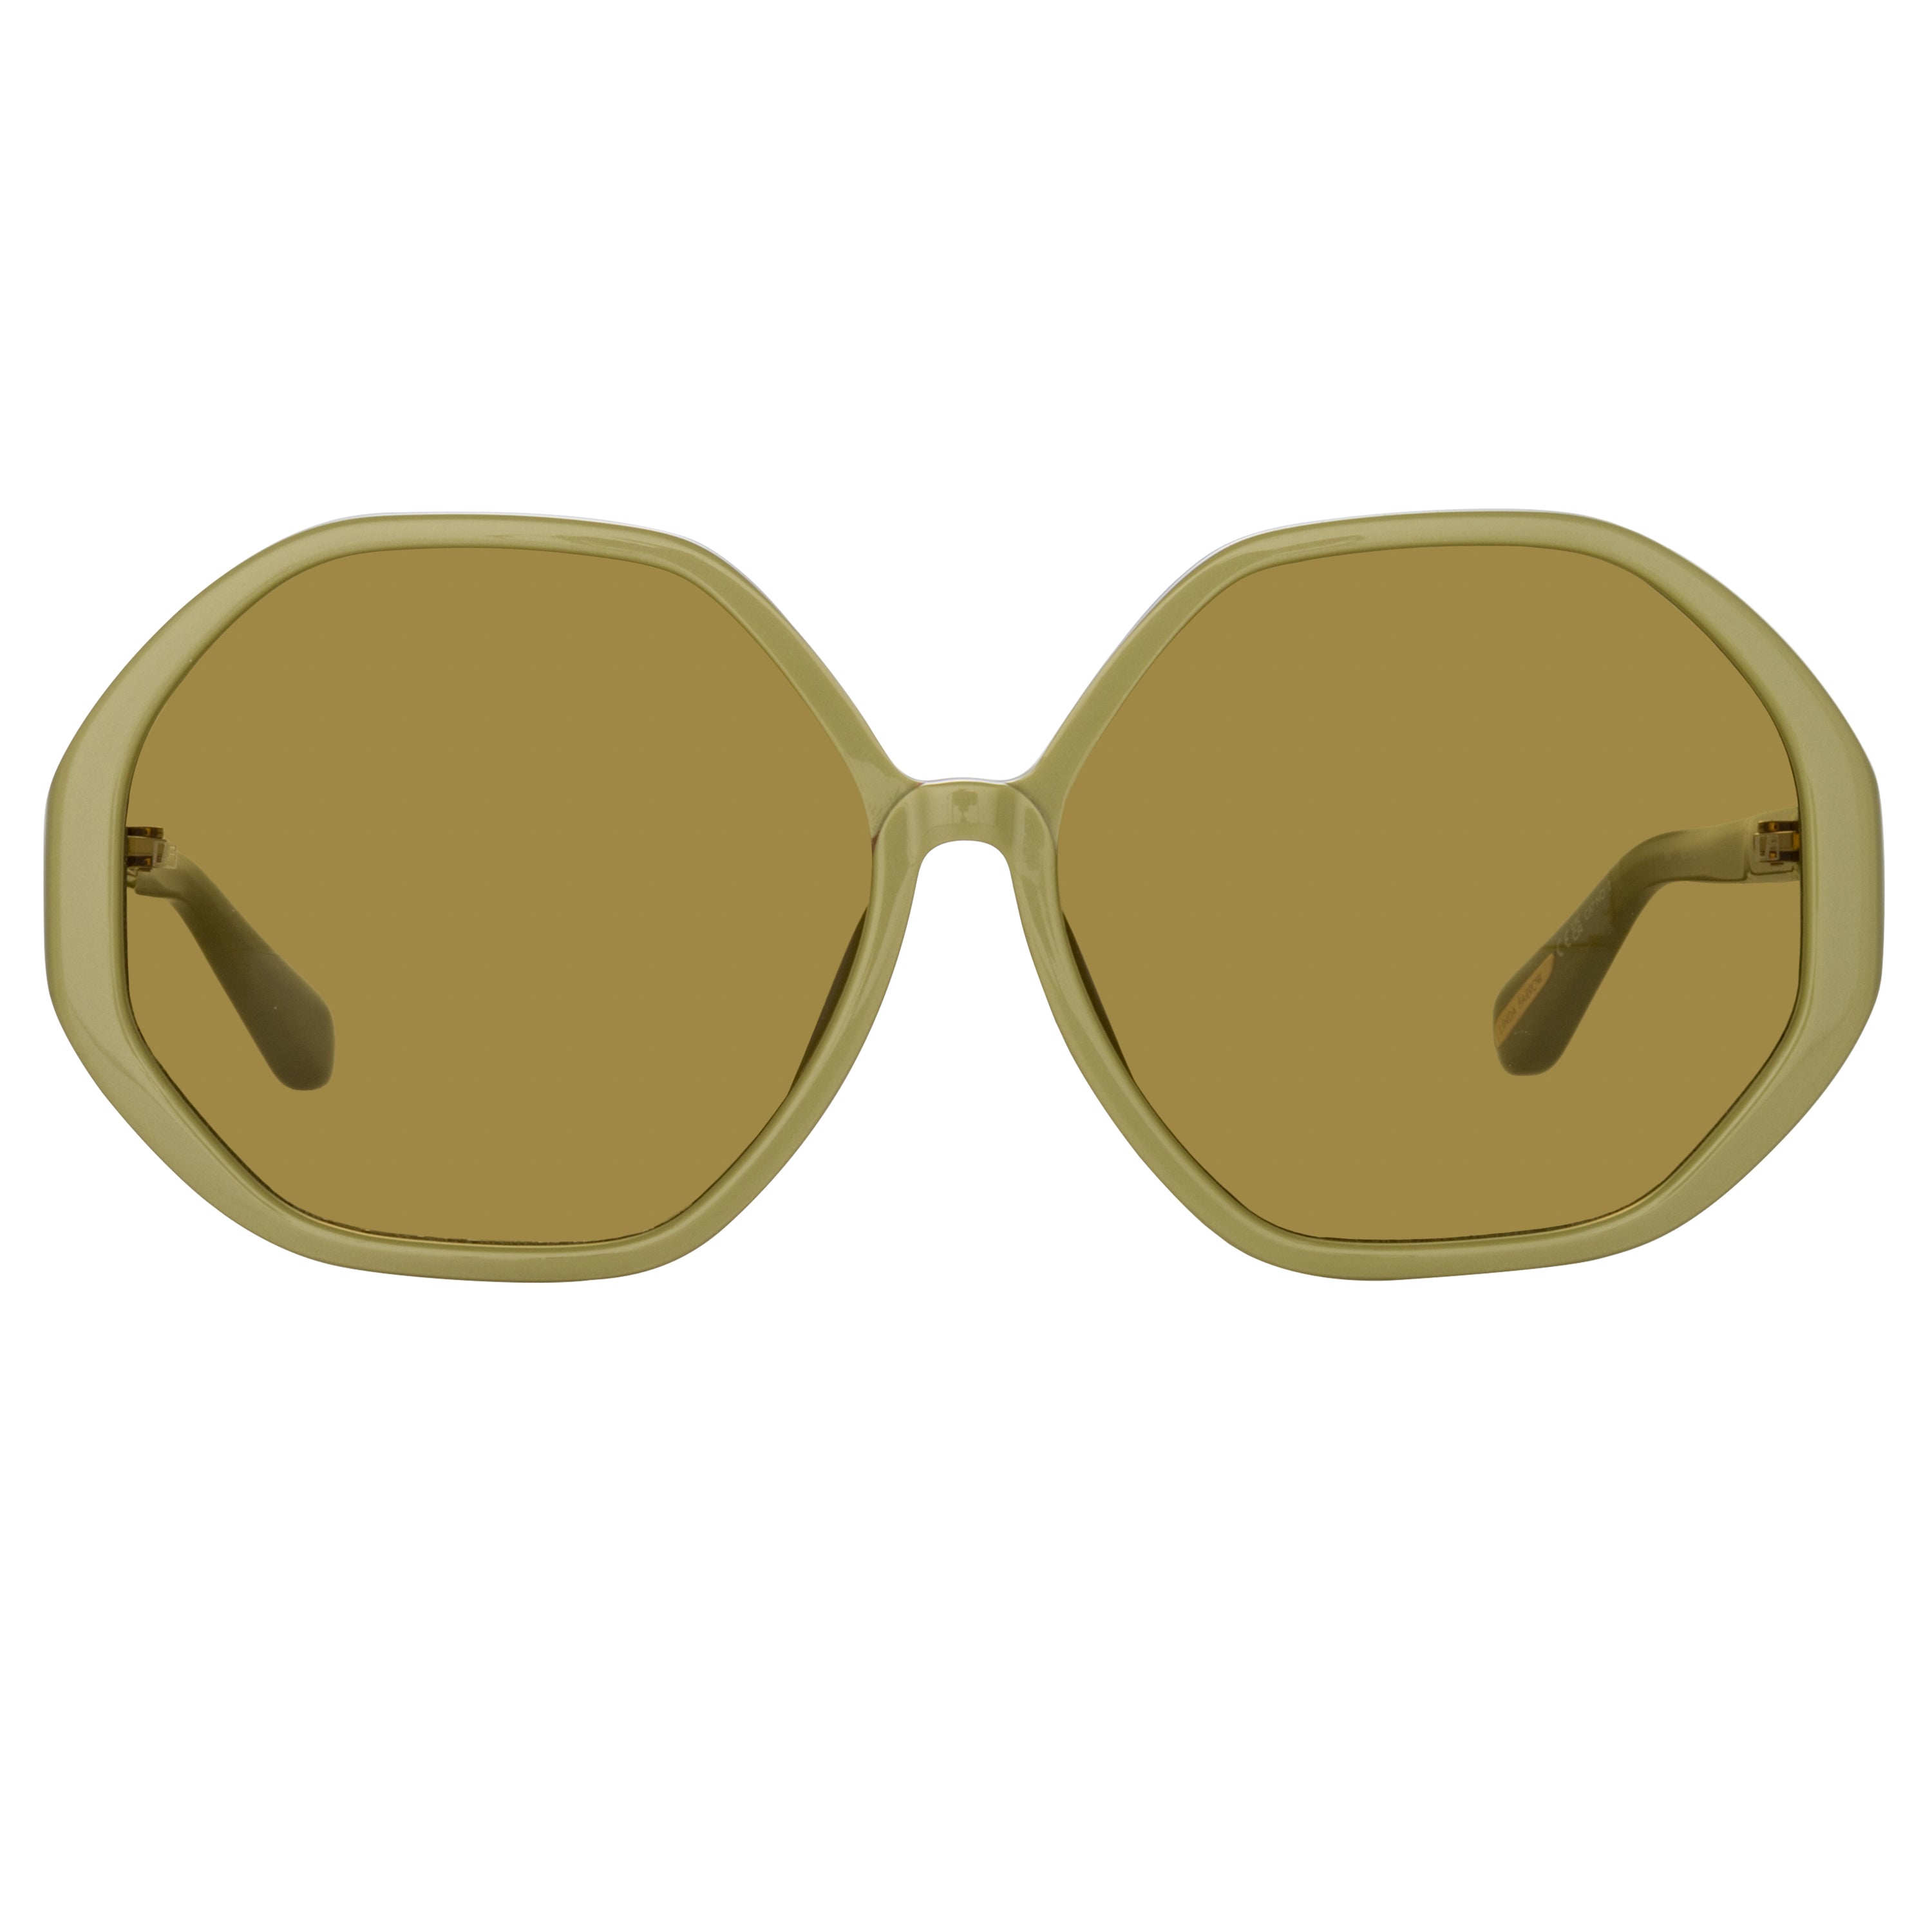 Paloma Hexagon Sunglasses in Sage